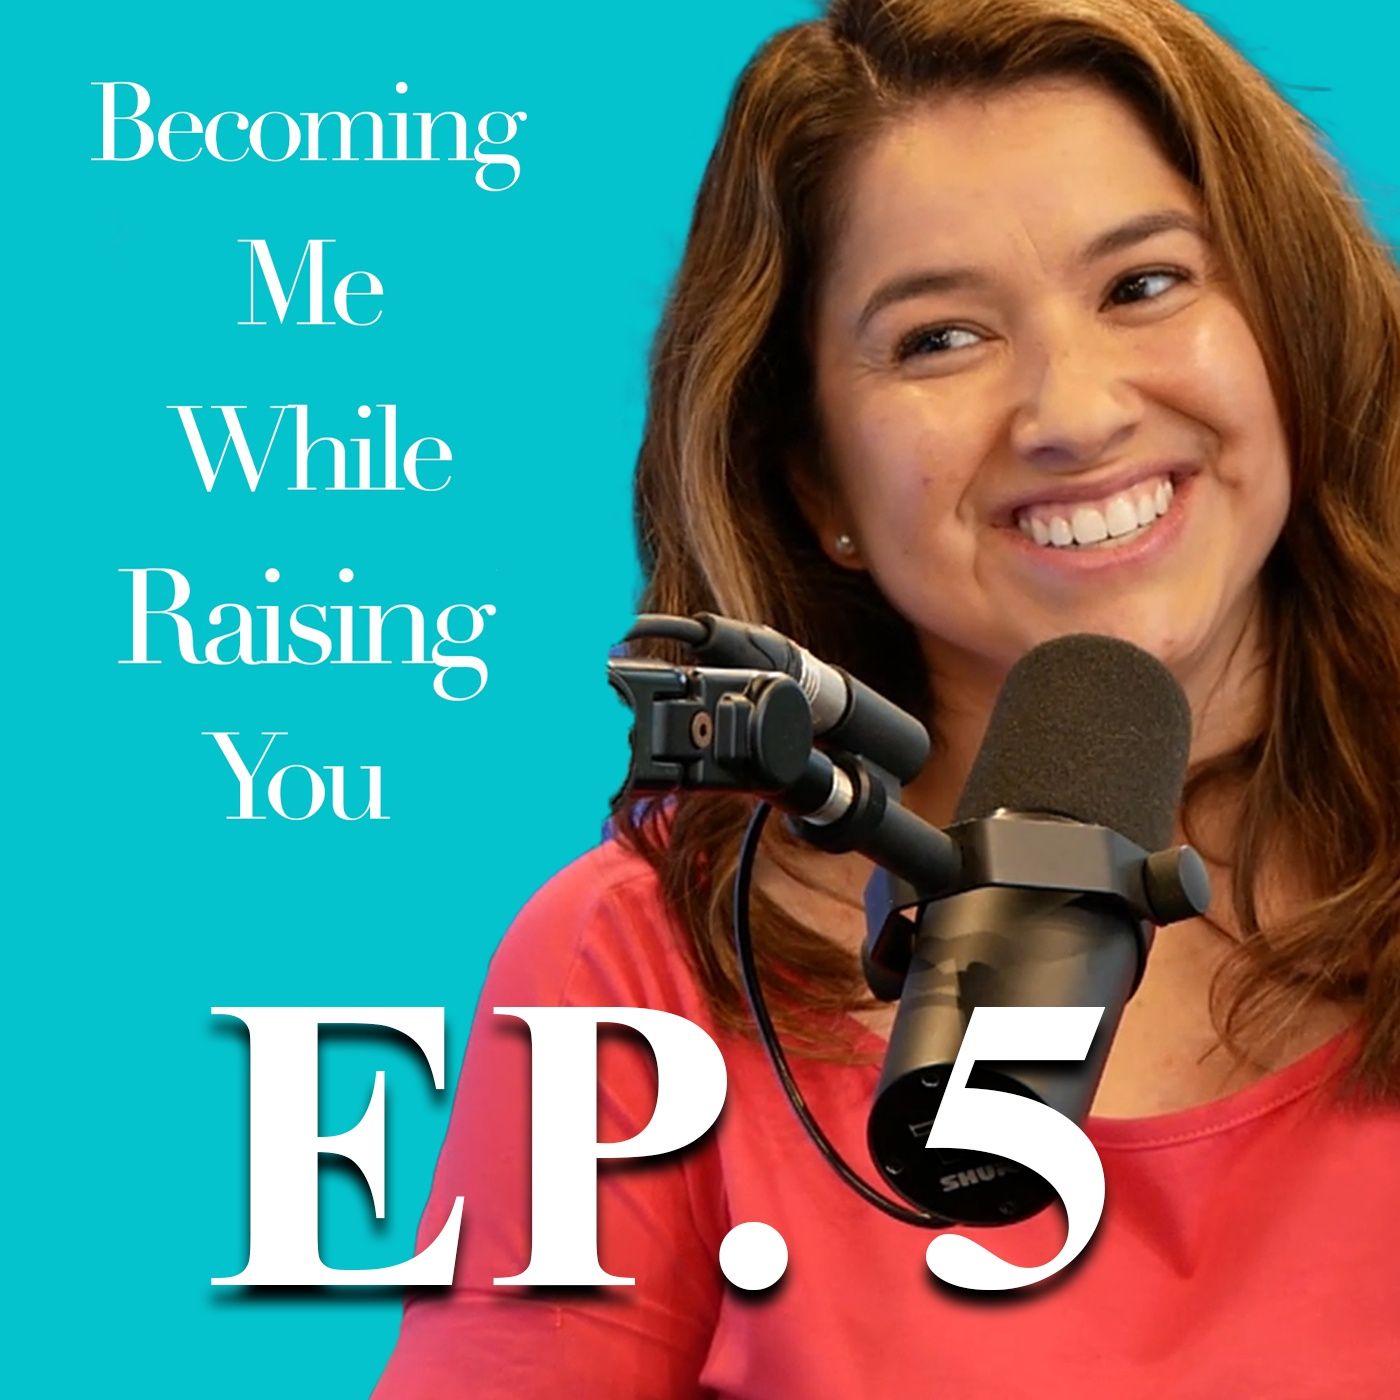 Sara Belmonte on Episode 5 of Becoming Me While Raising You